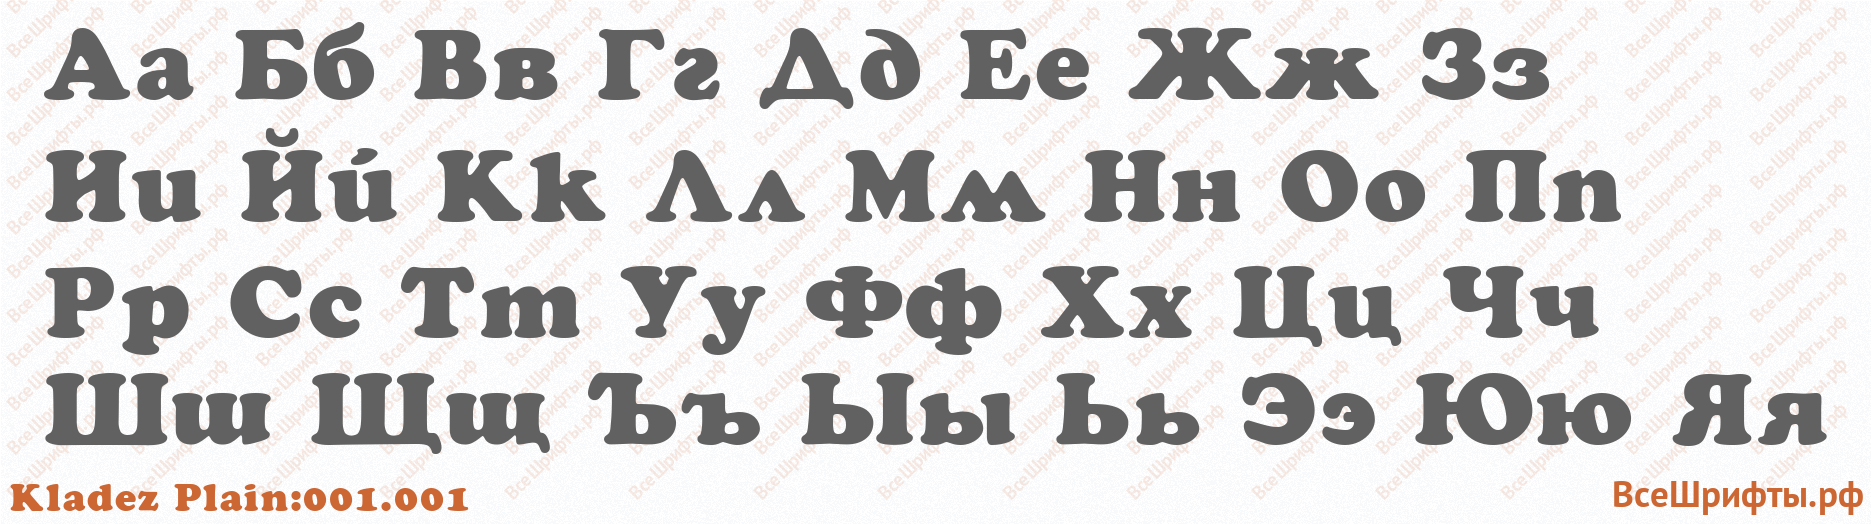 Шрифт Kladez Plain:001.001 с русскими буквами